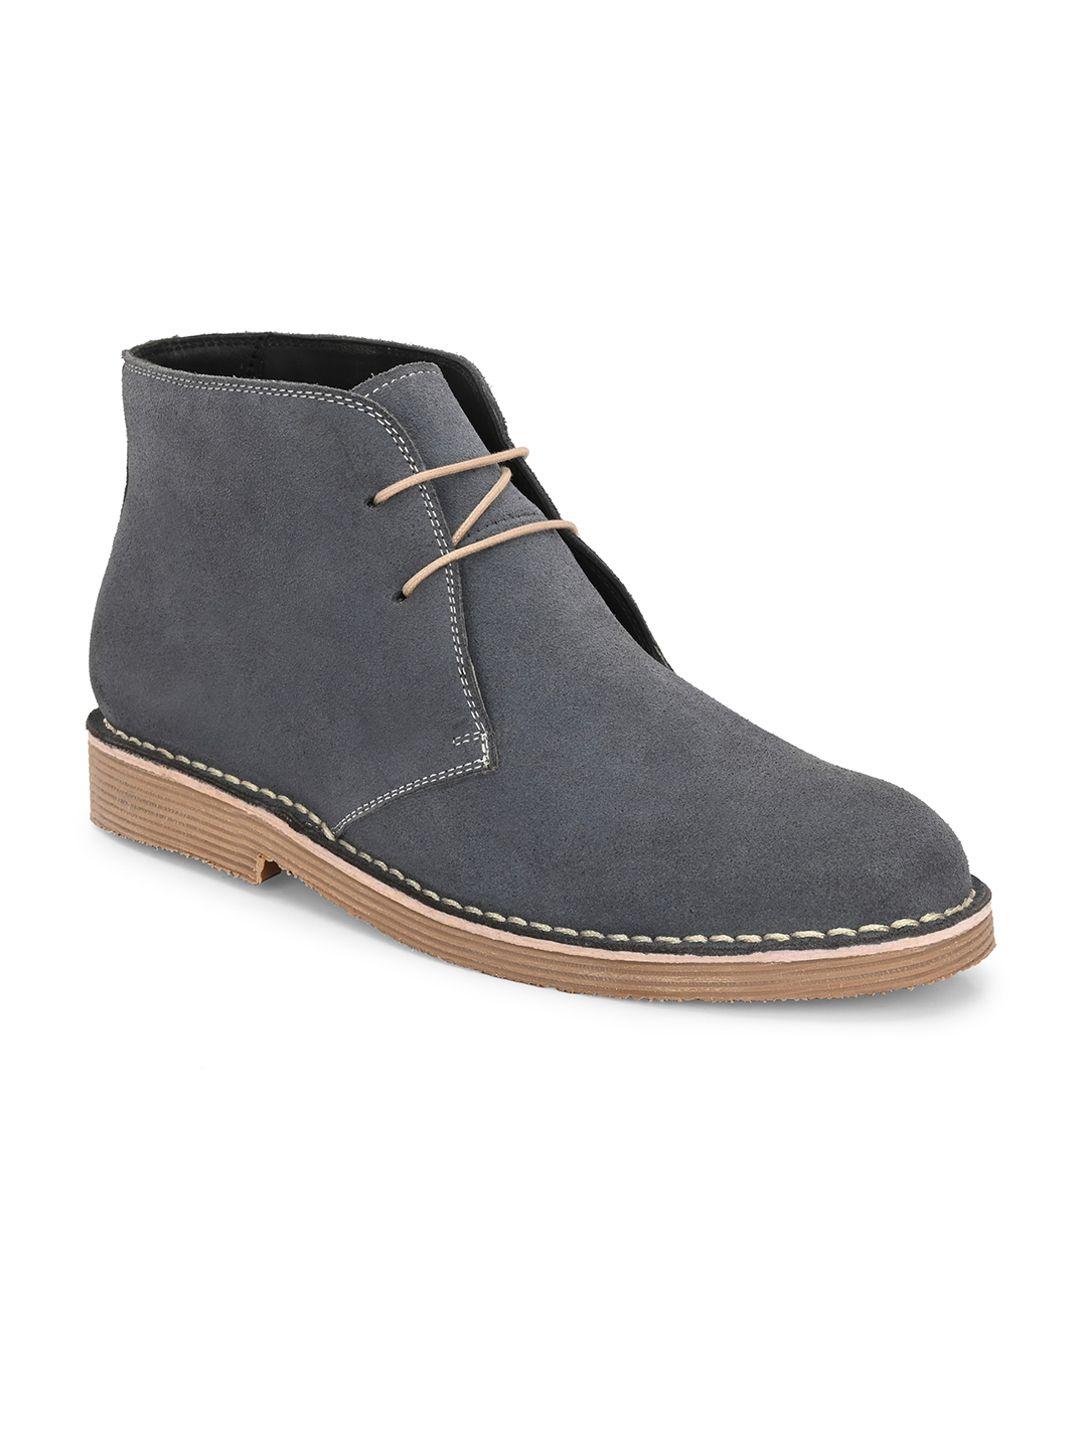 harrytech-london-men-leather-mid-top-desert-boots